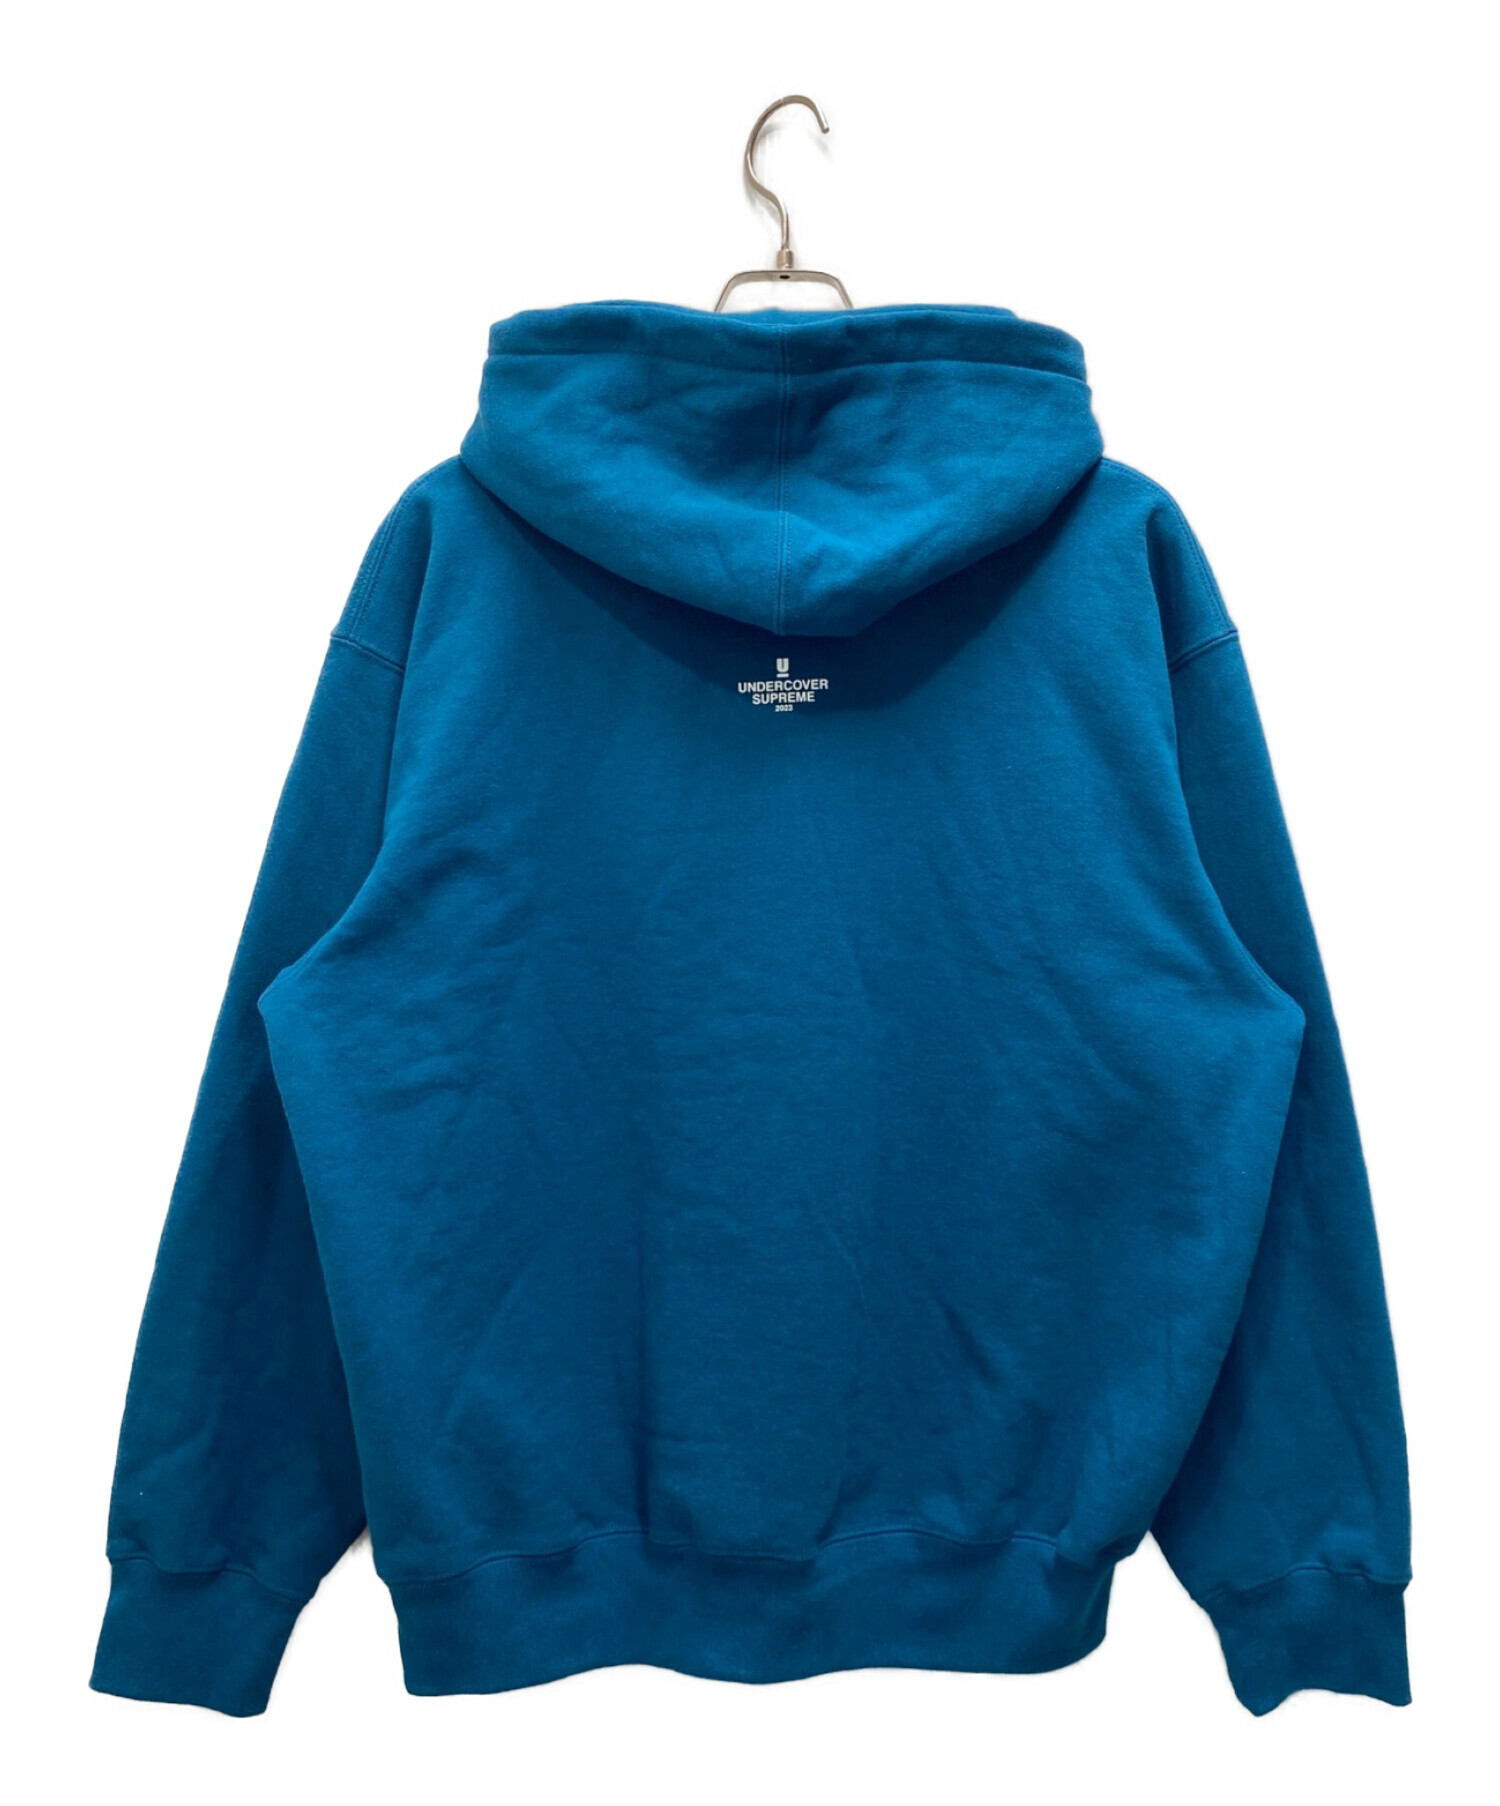 Supreme (シュプリーム) UNDERCOVER (アンダーカバー) UNDERCOVER Anti You Hooded Sweatshirt  ブルー サイズ:M